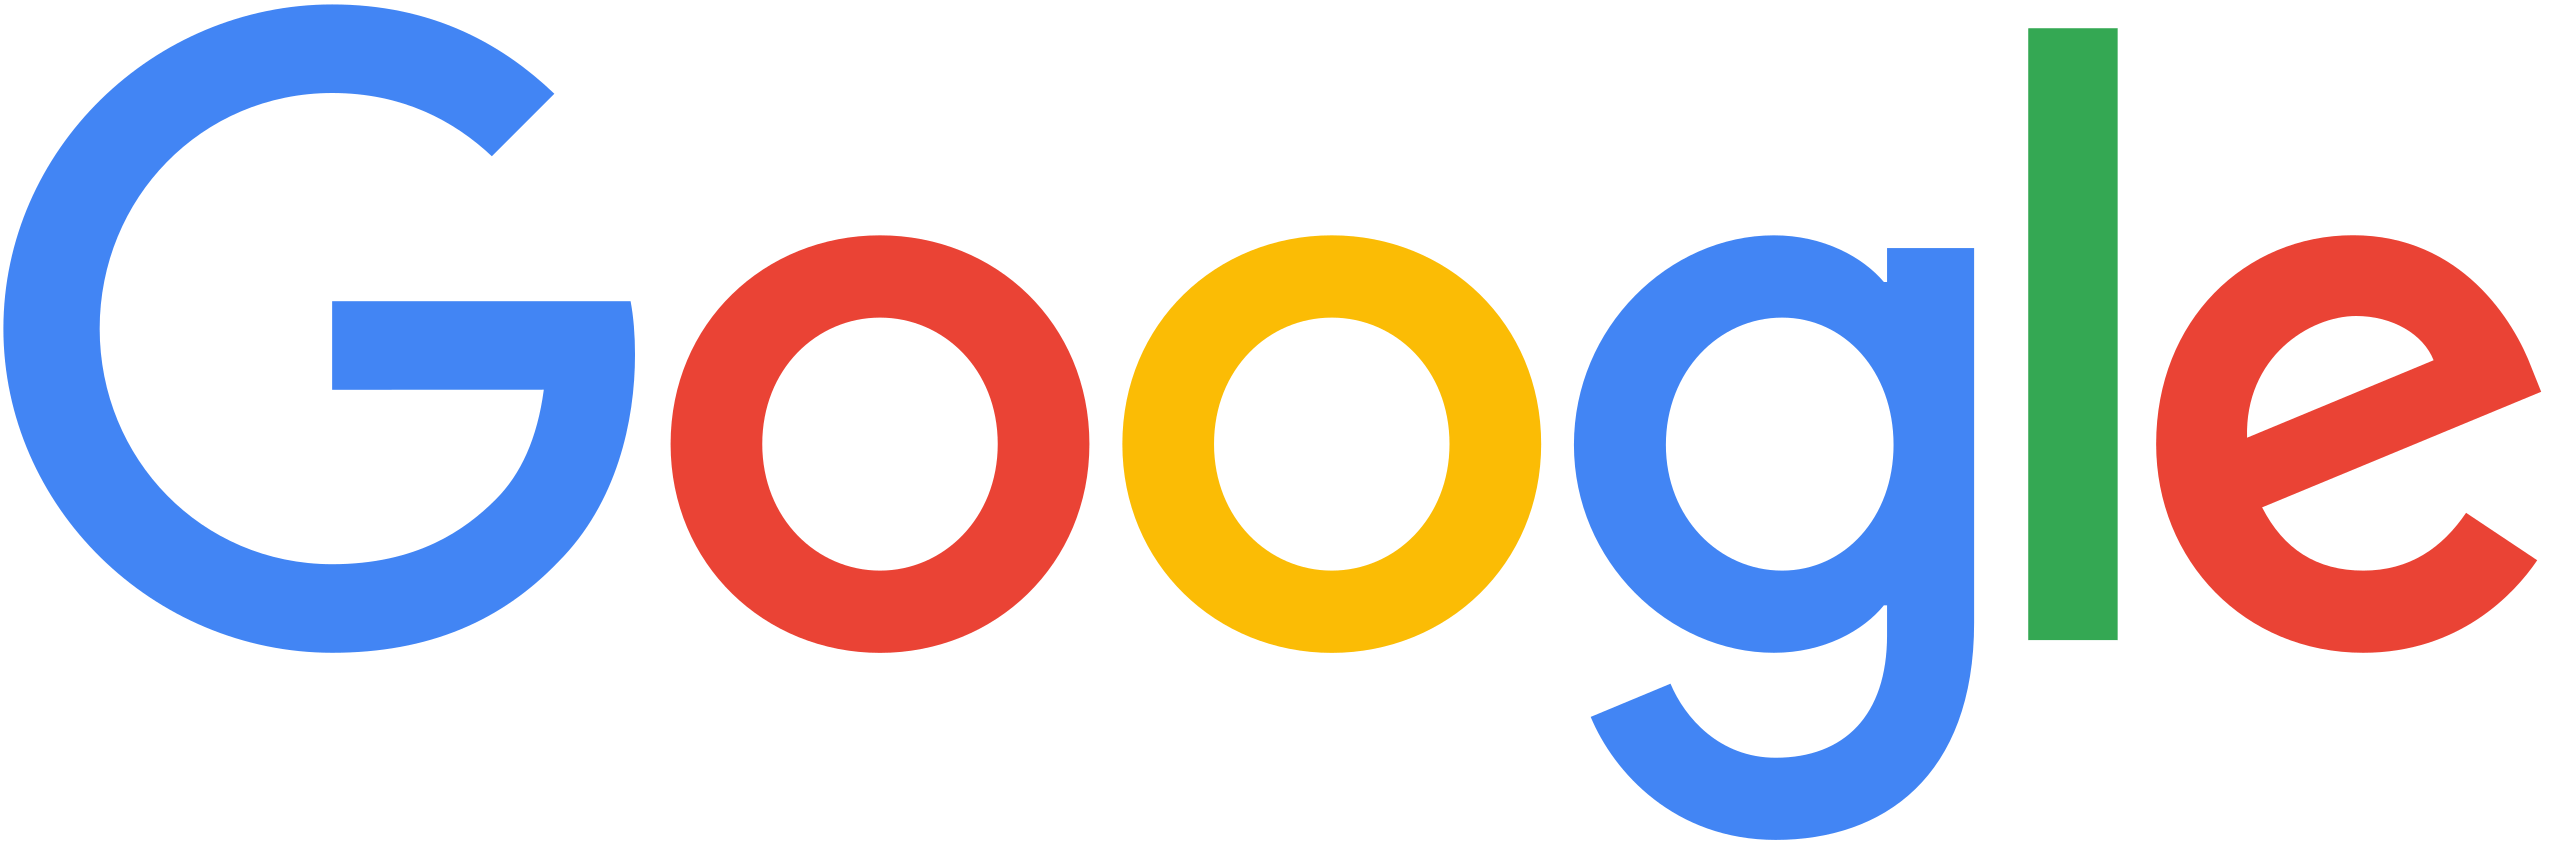 Google logo svg